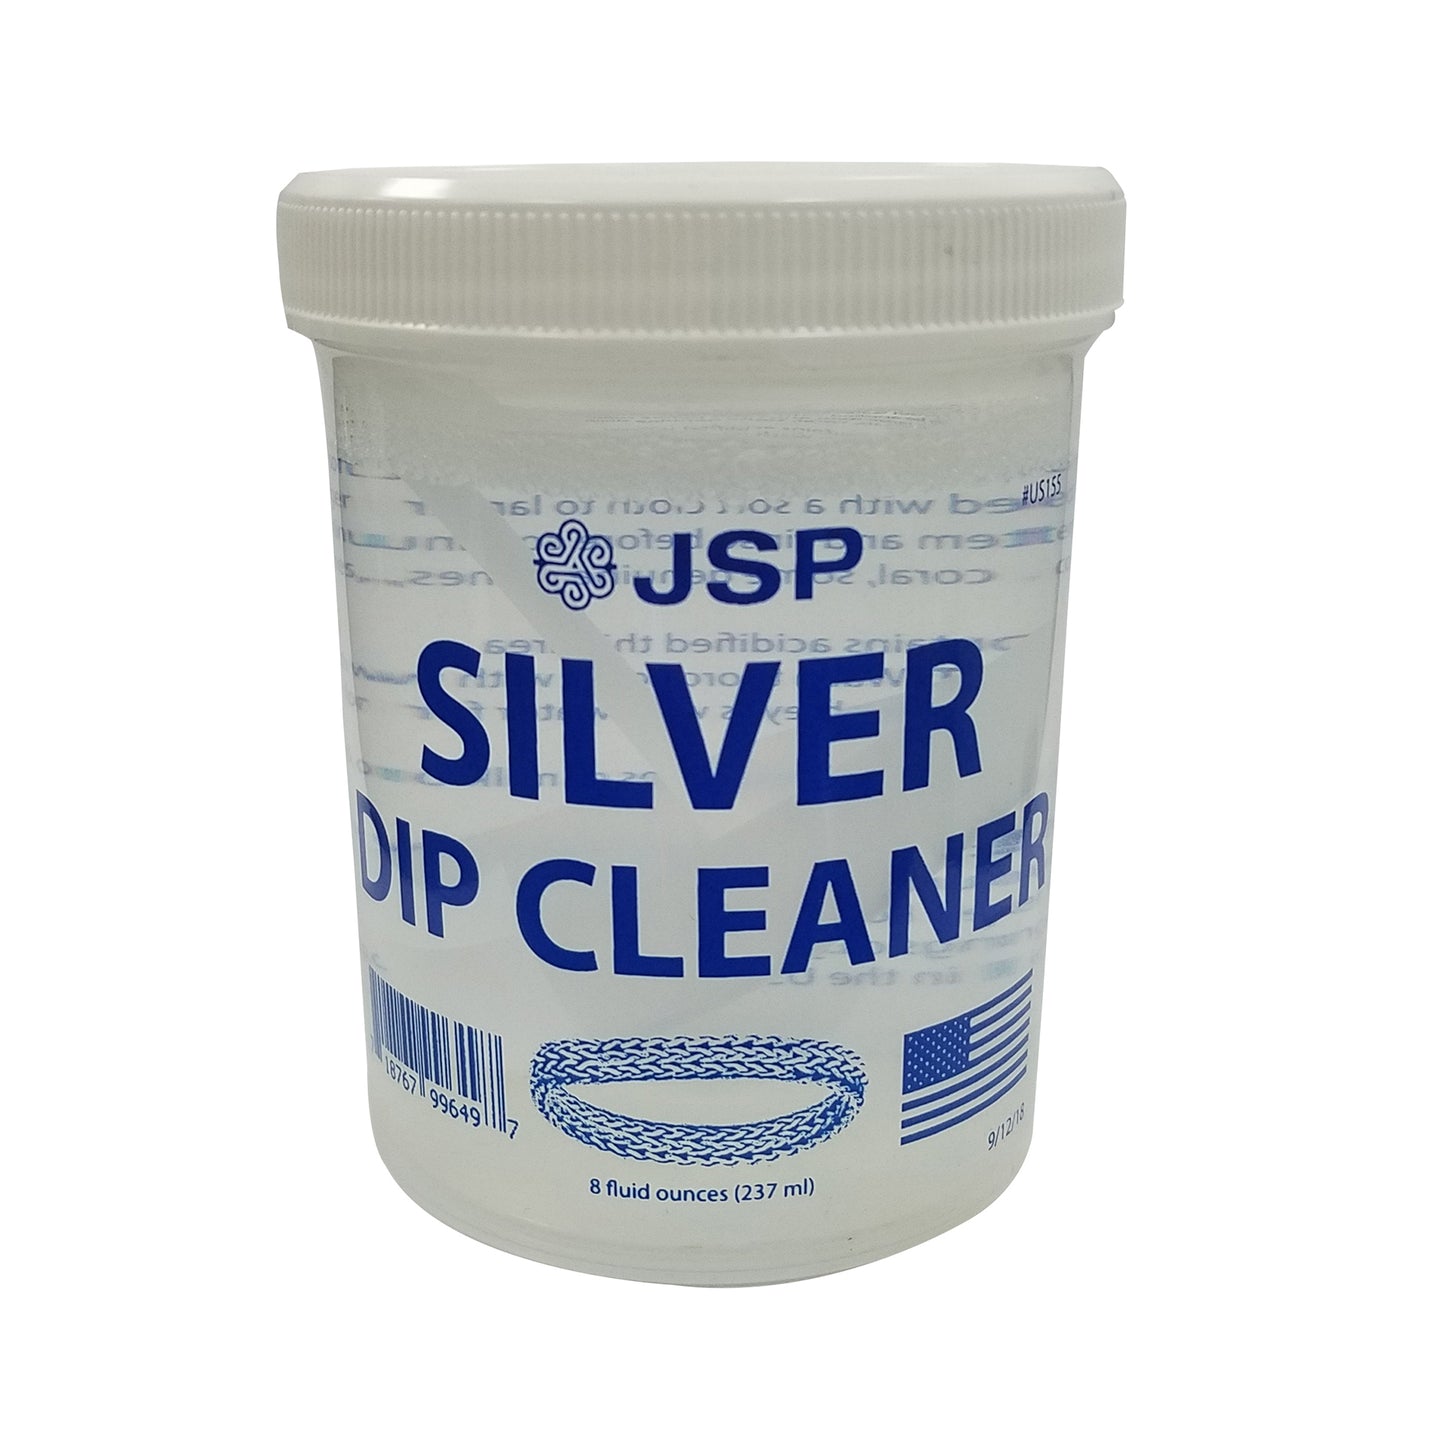 Made In U.S.A. 8 oz Silver Dip Cleaner